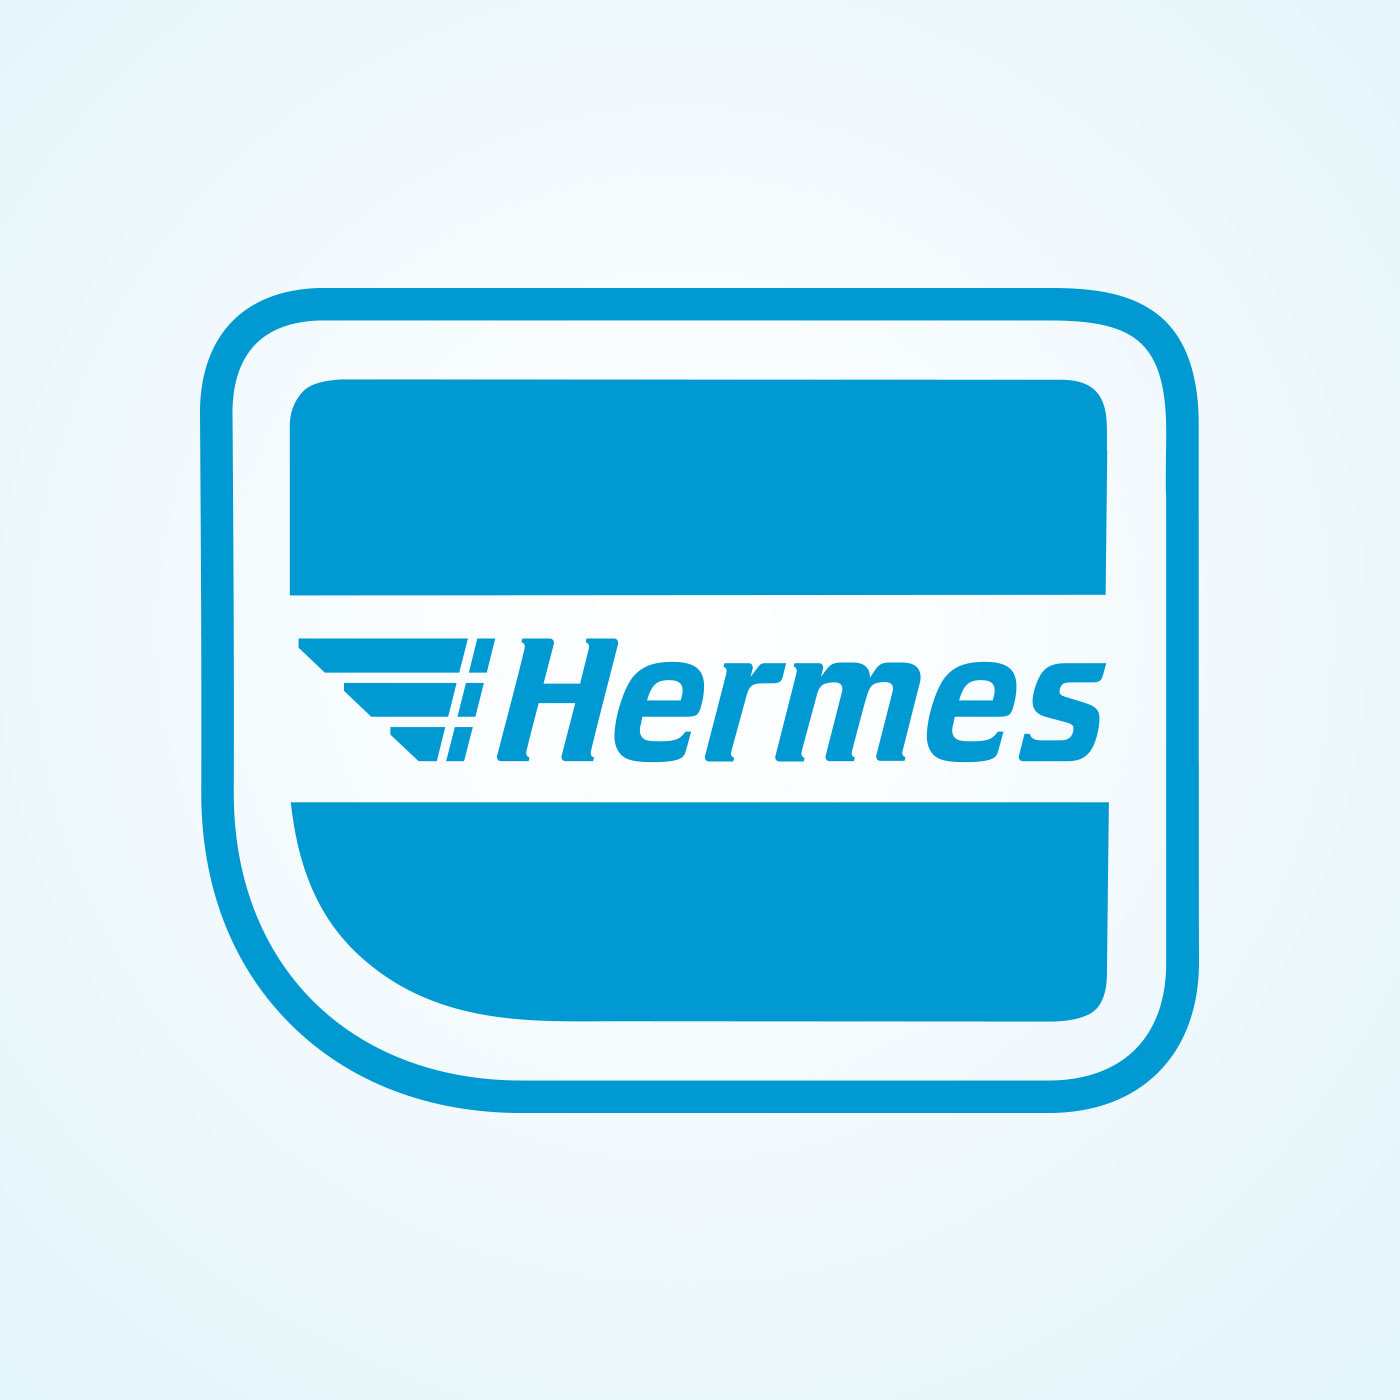 Vorländer ist Hermes Paket-Shop Partner